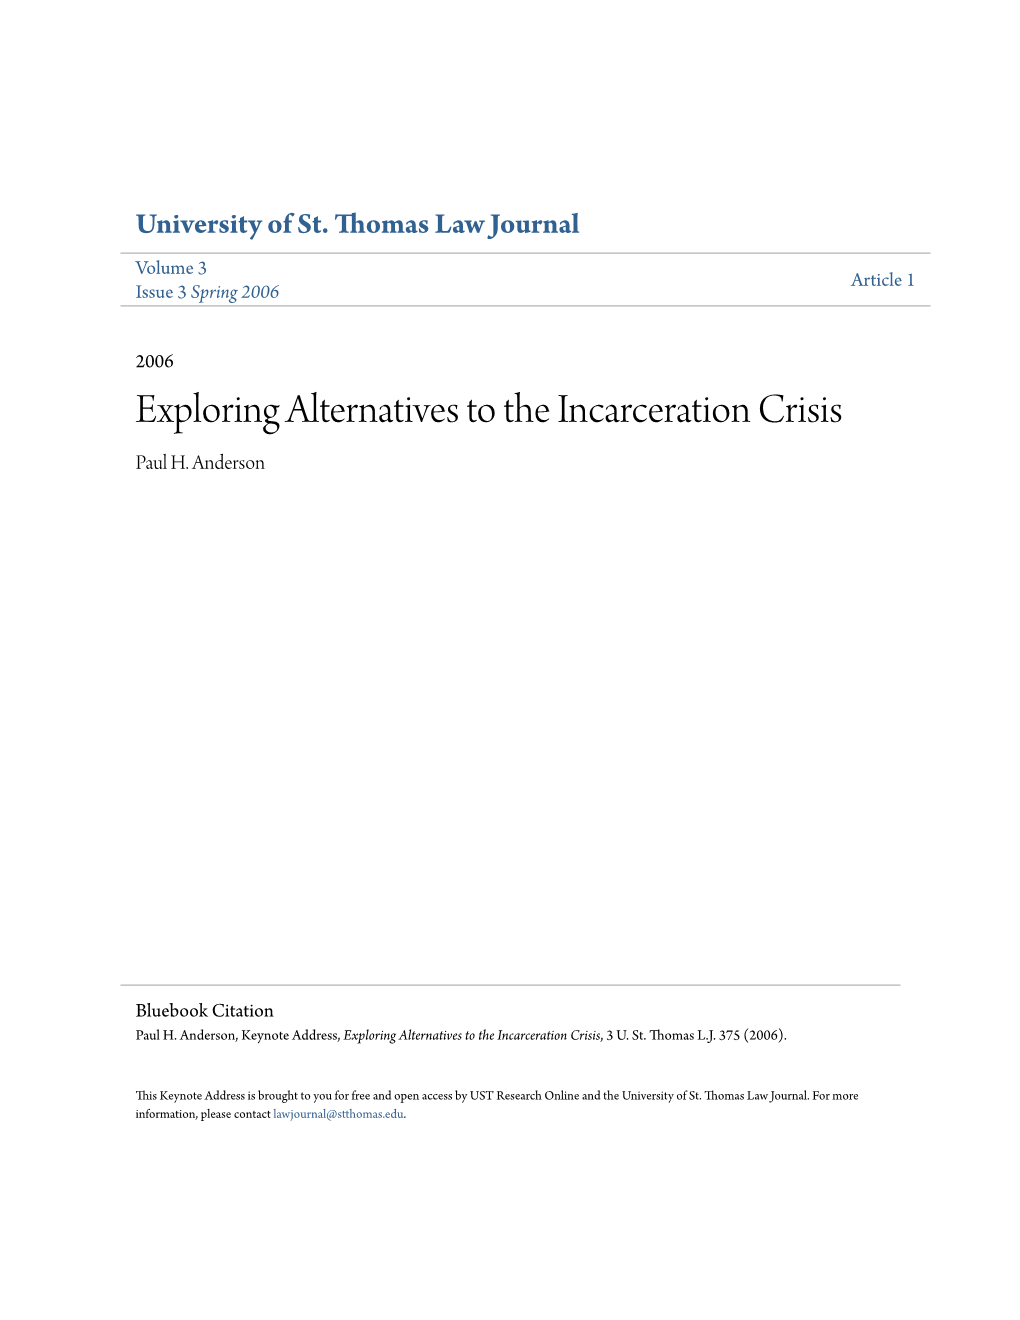 Exploring Alternatives to the Incarceration Crisis Paul H